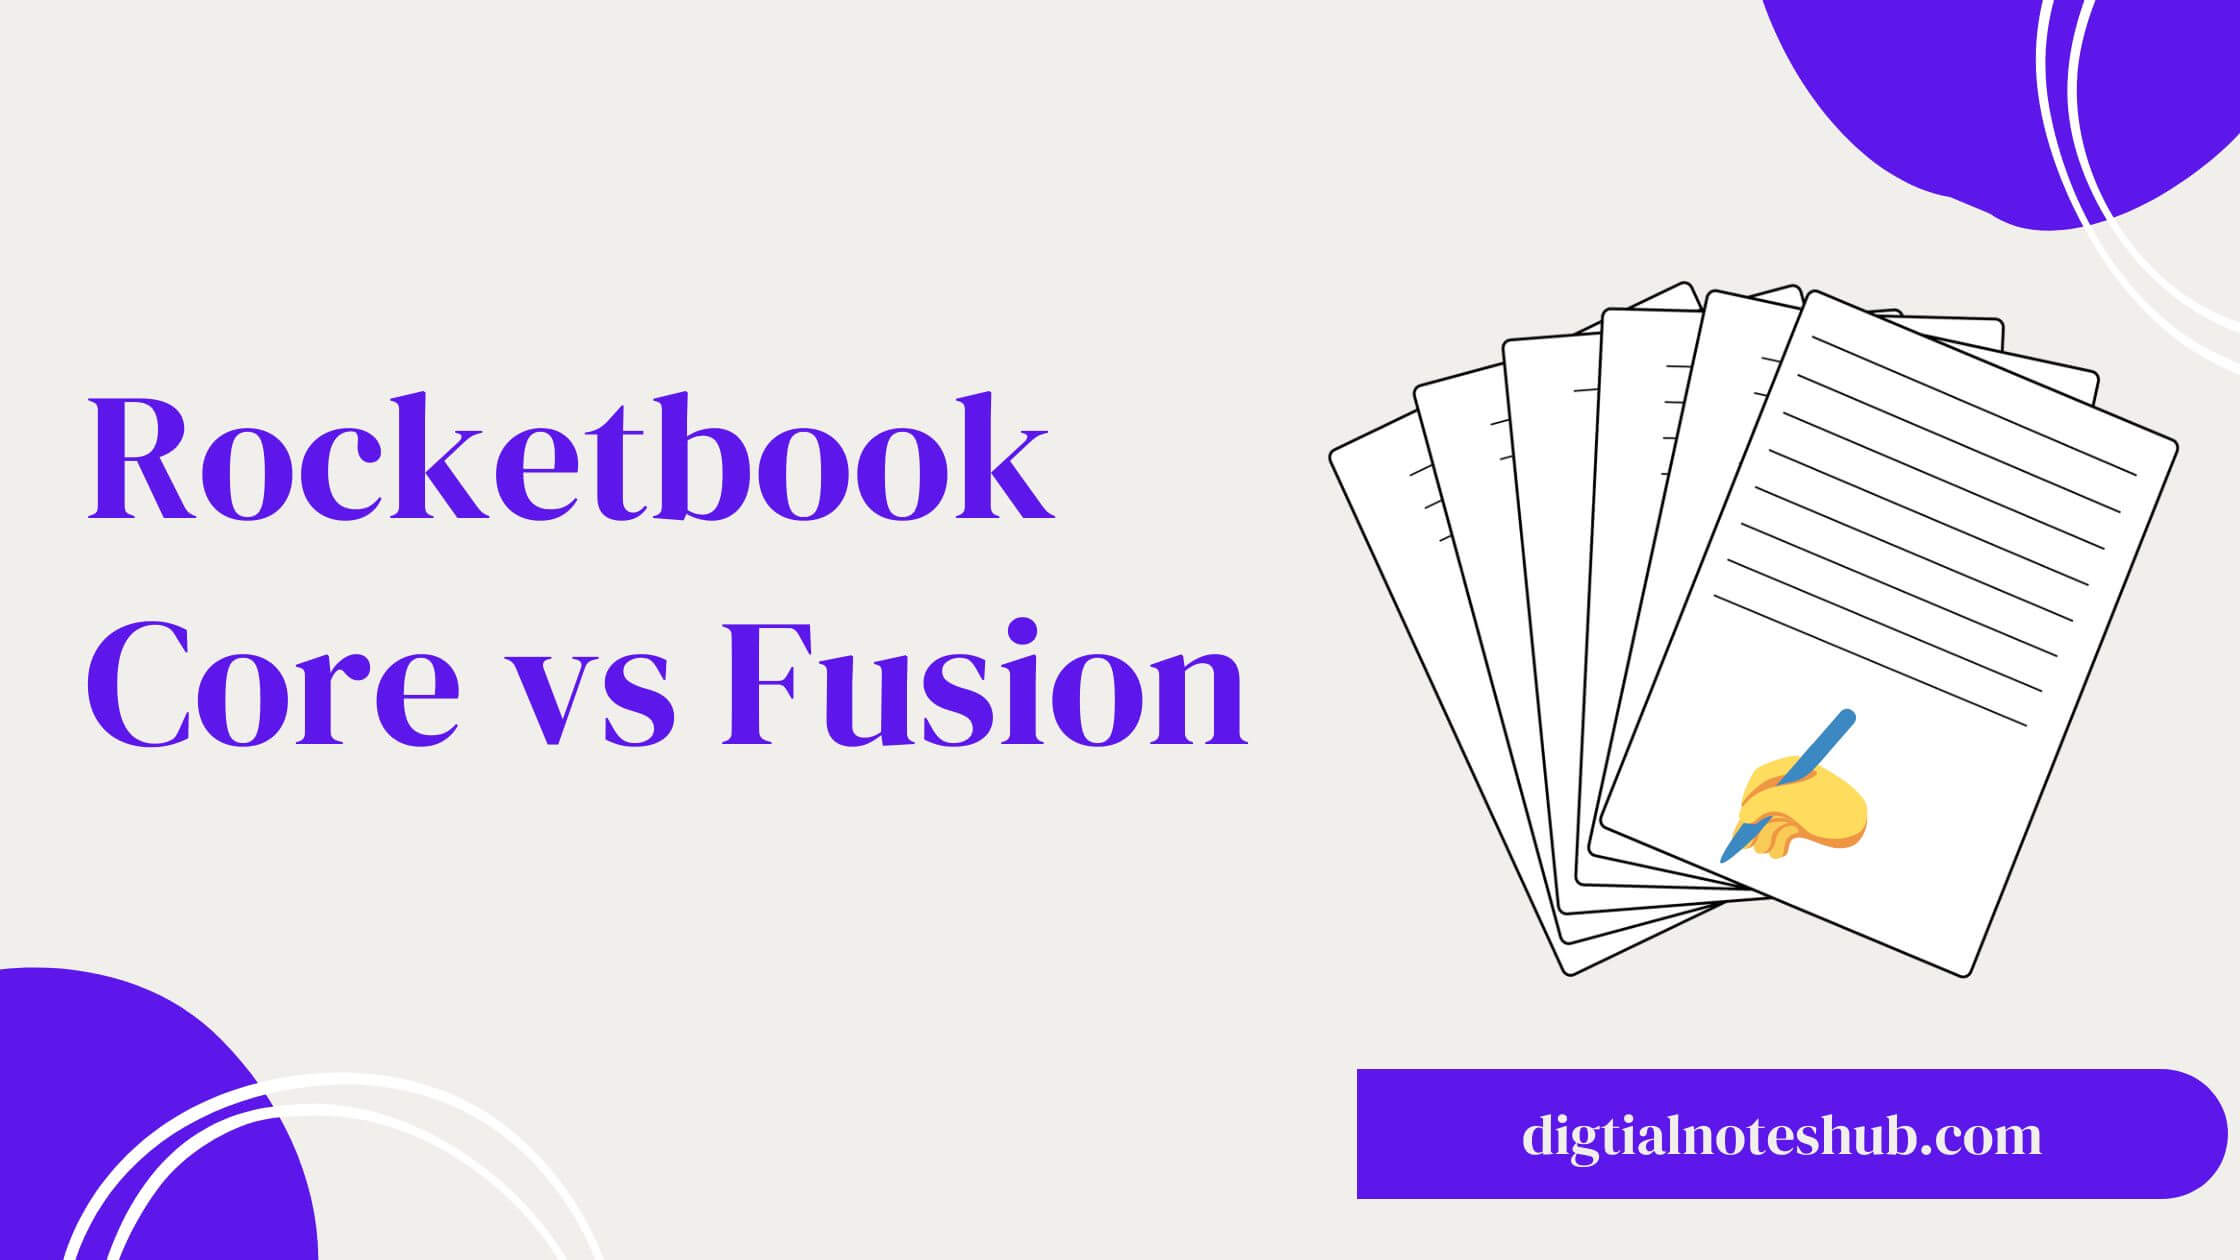 Rocketbook Core vs Fusion